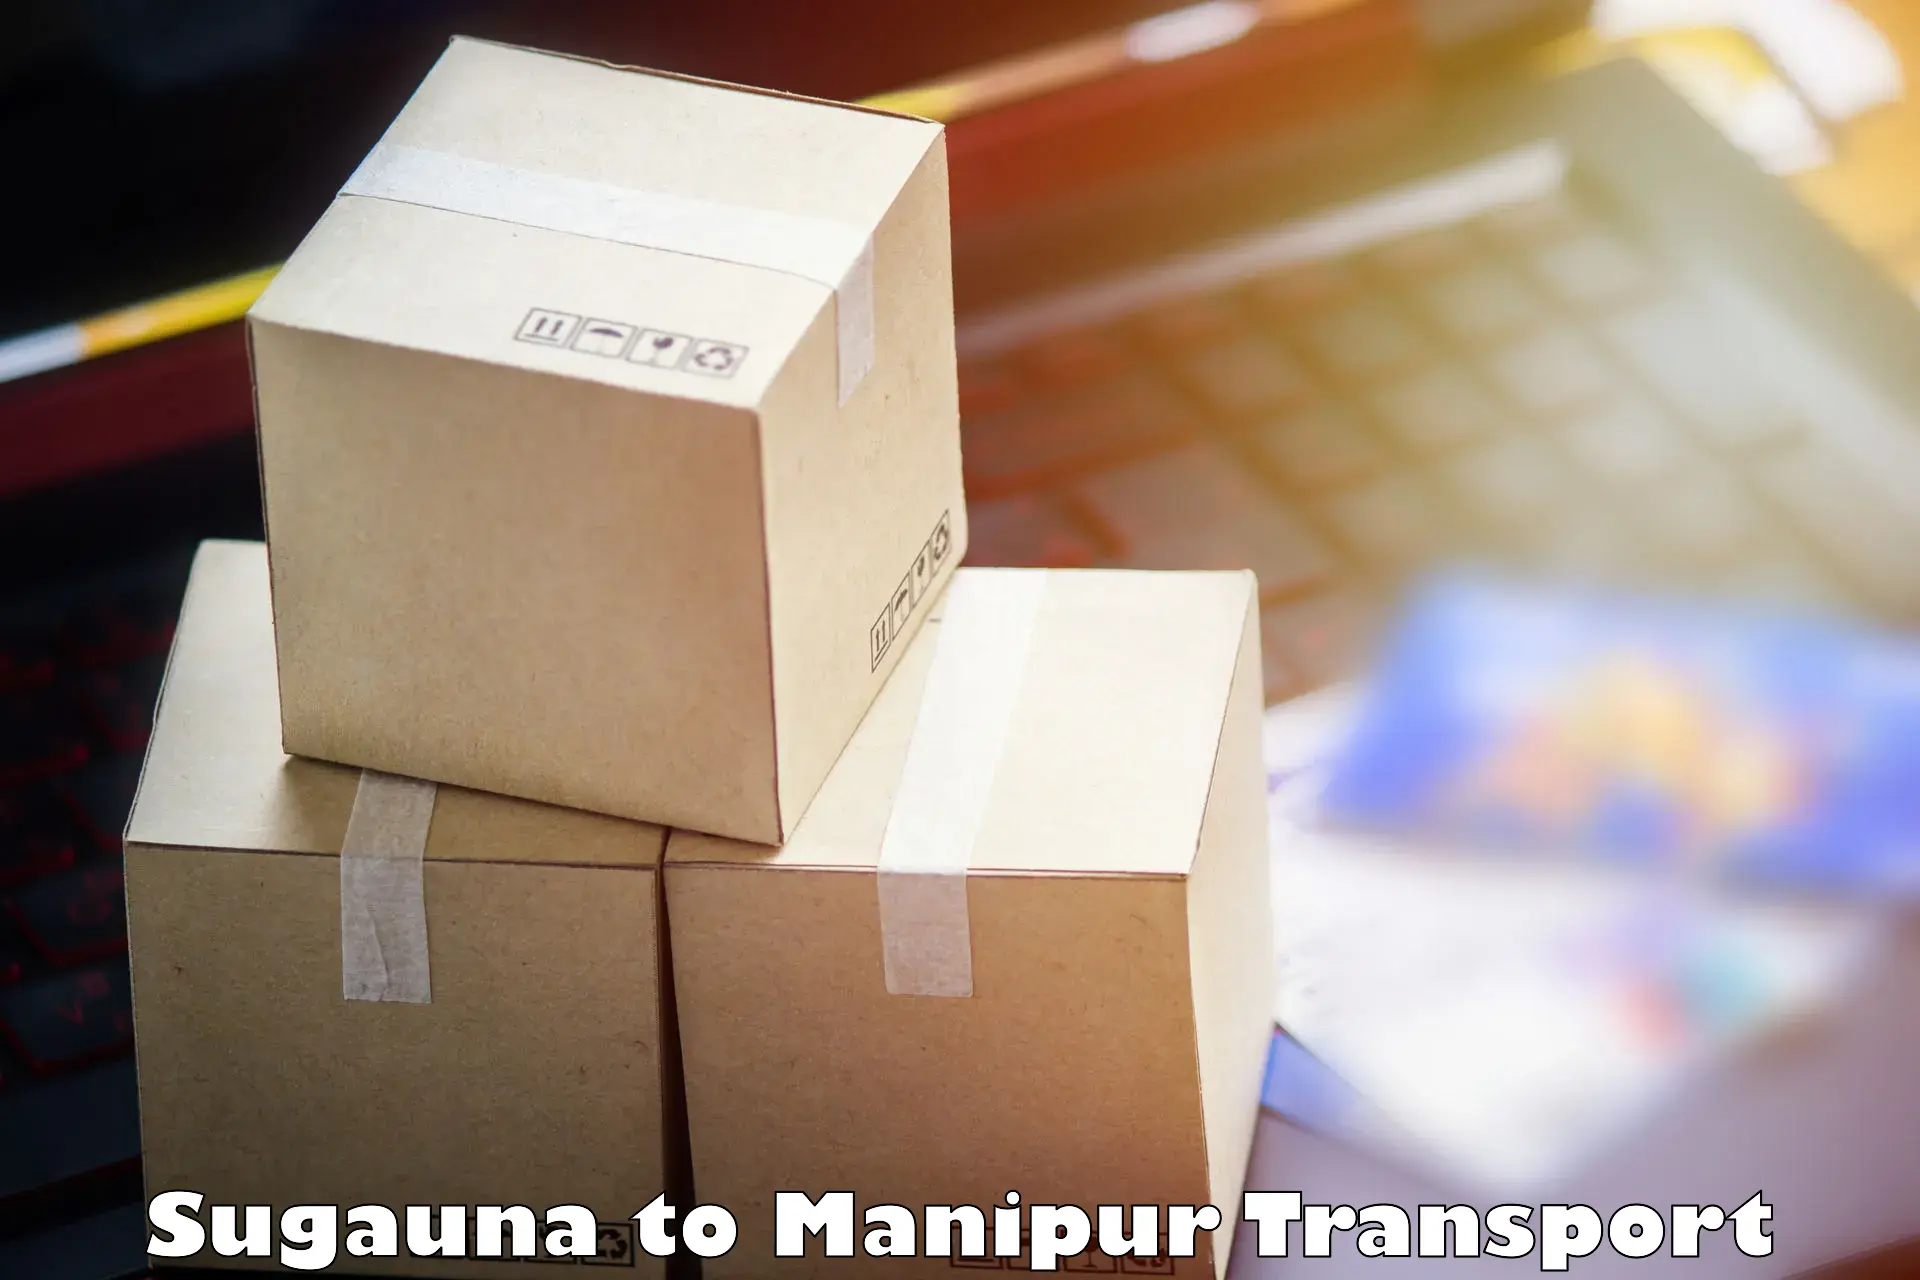 Transport shared services Sugauna to Manipur